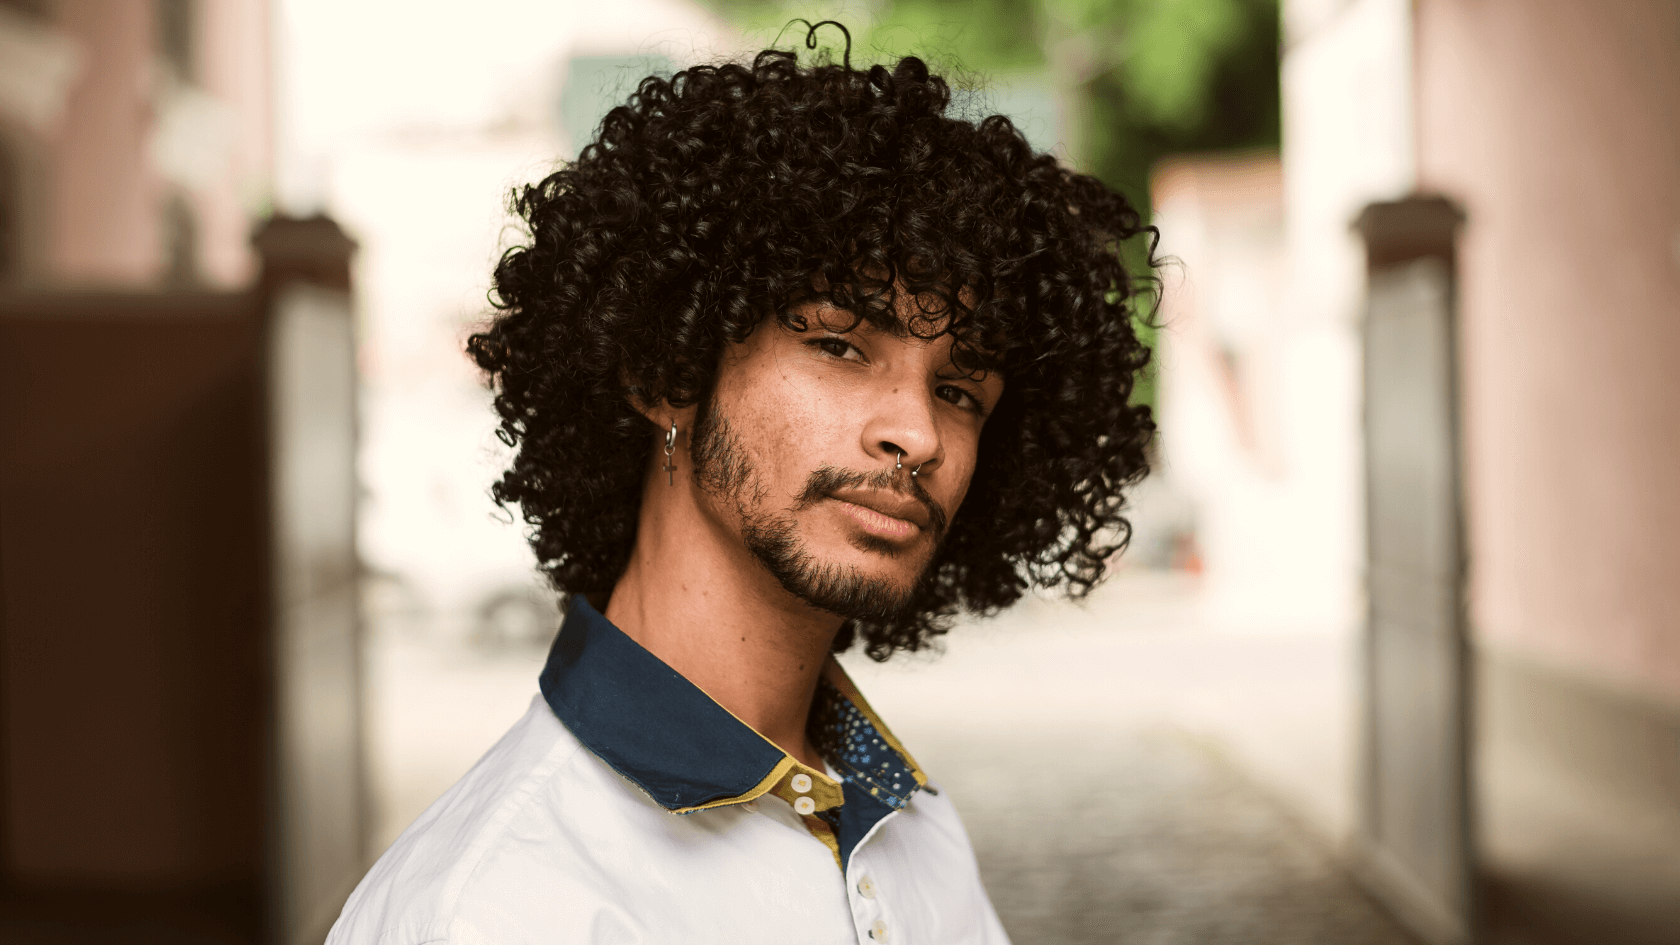 Corte de cabelo masculino: descubra os estilos em alta